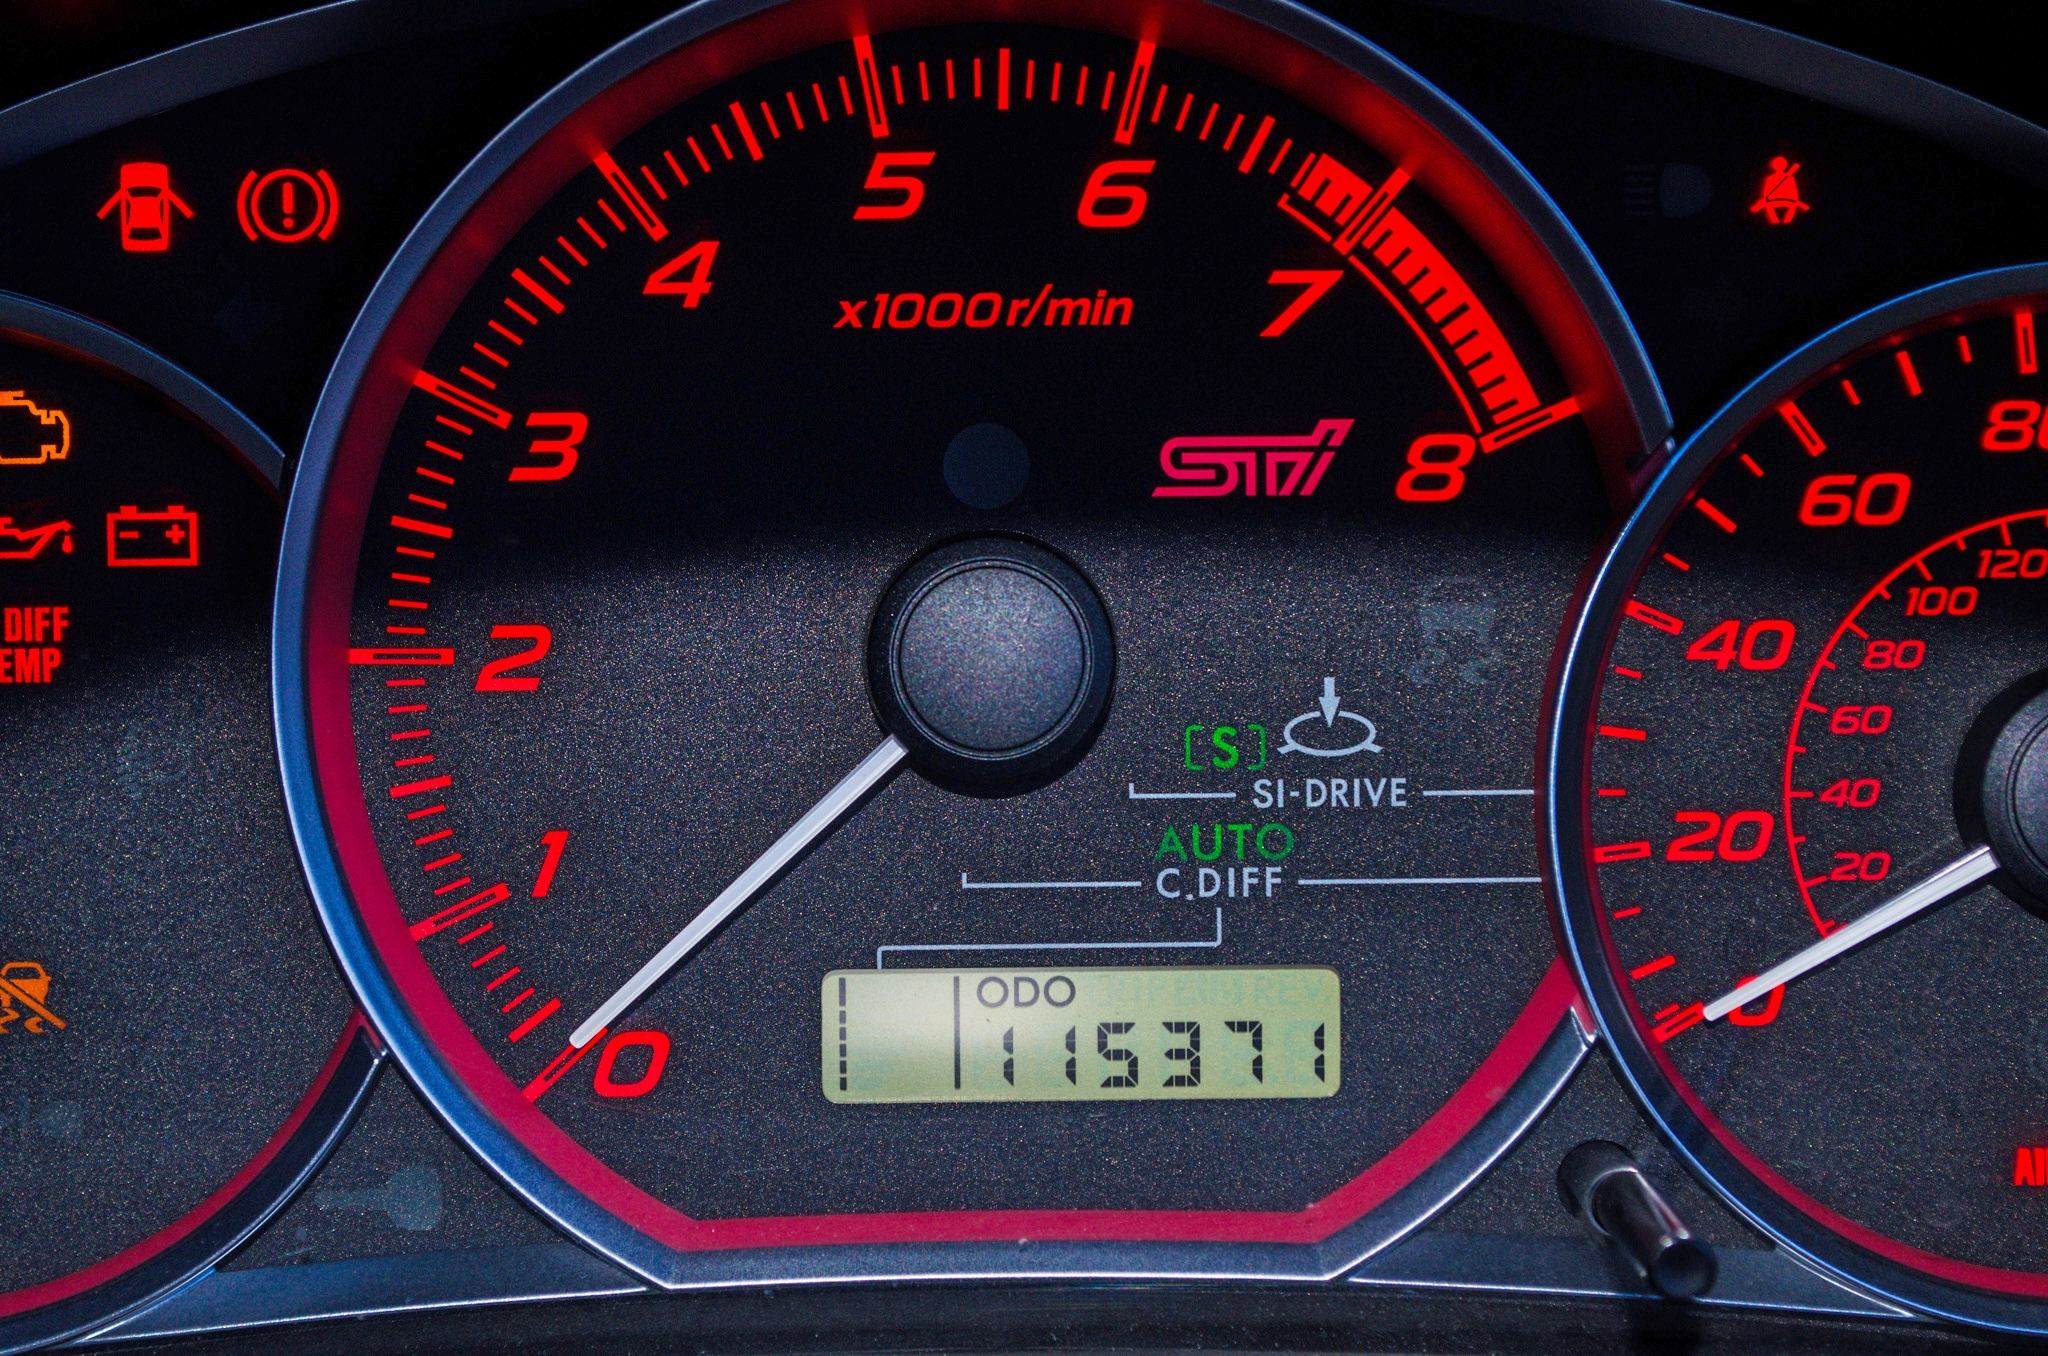 2011 Subaru Impreza WRX STI-TP UK AWD 2.5 litre turbo 4 door saloon car - Image 53 of 57